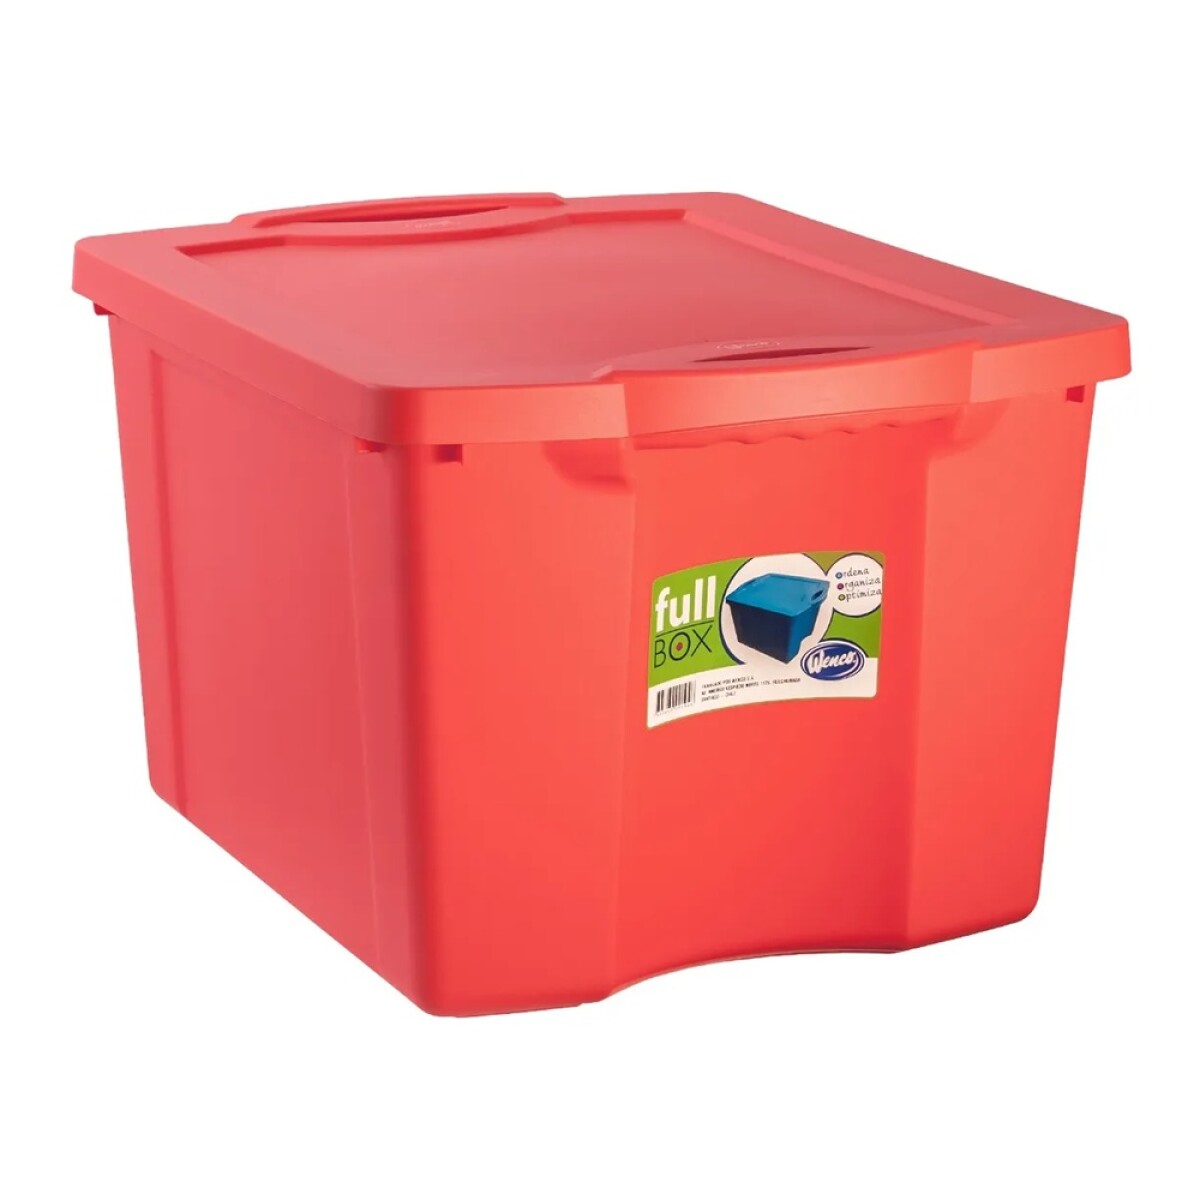 Caja Organizadora Full Box Wenco 75lts - Rojo 